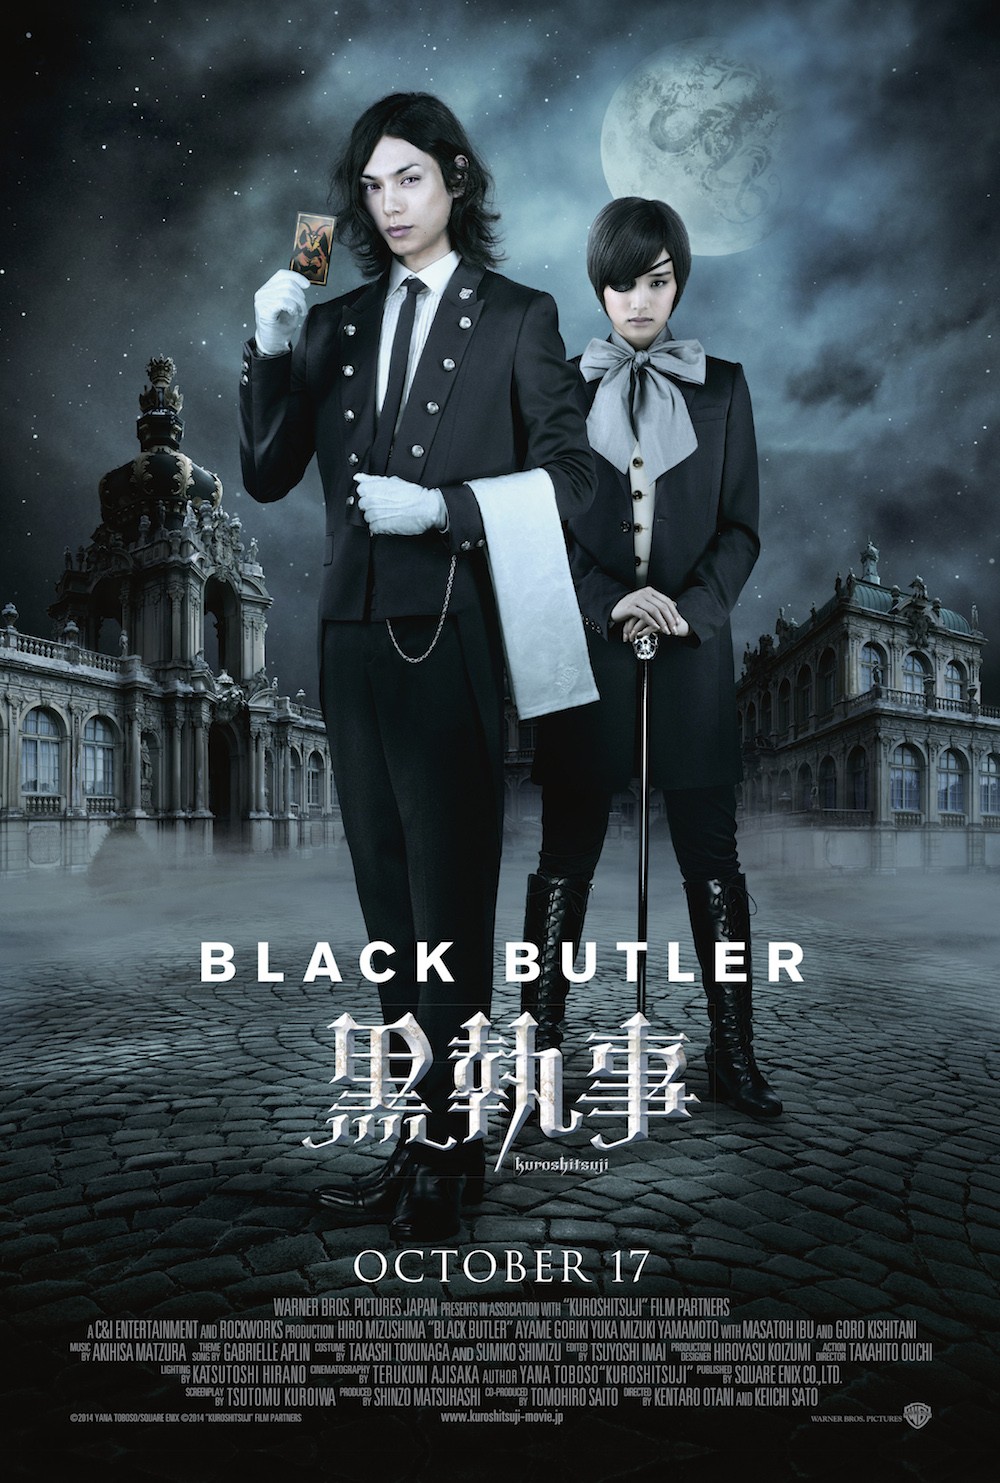 Extra Large Movie Poster Image for Kuroshitsuji 